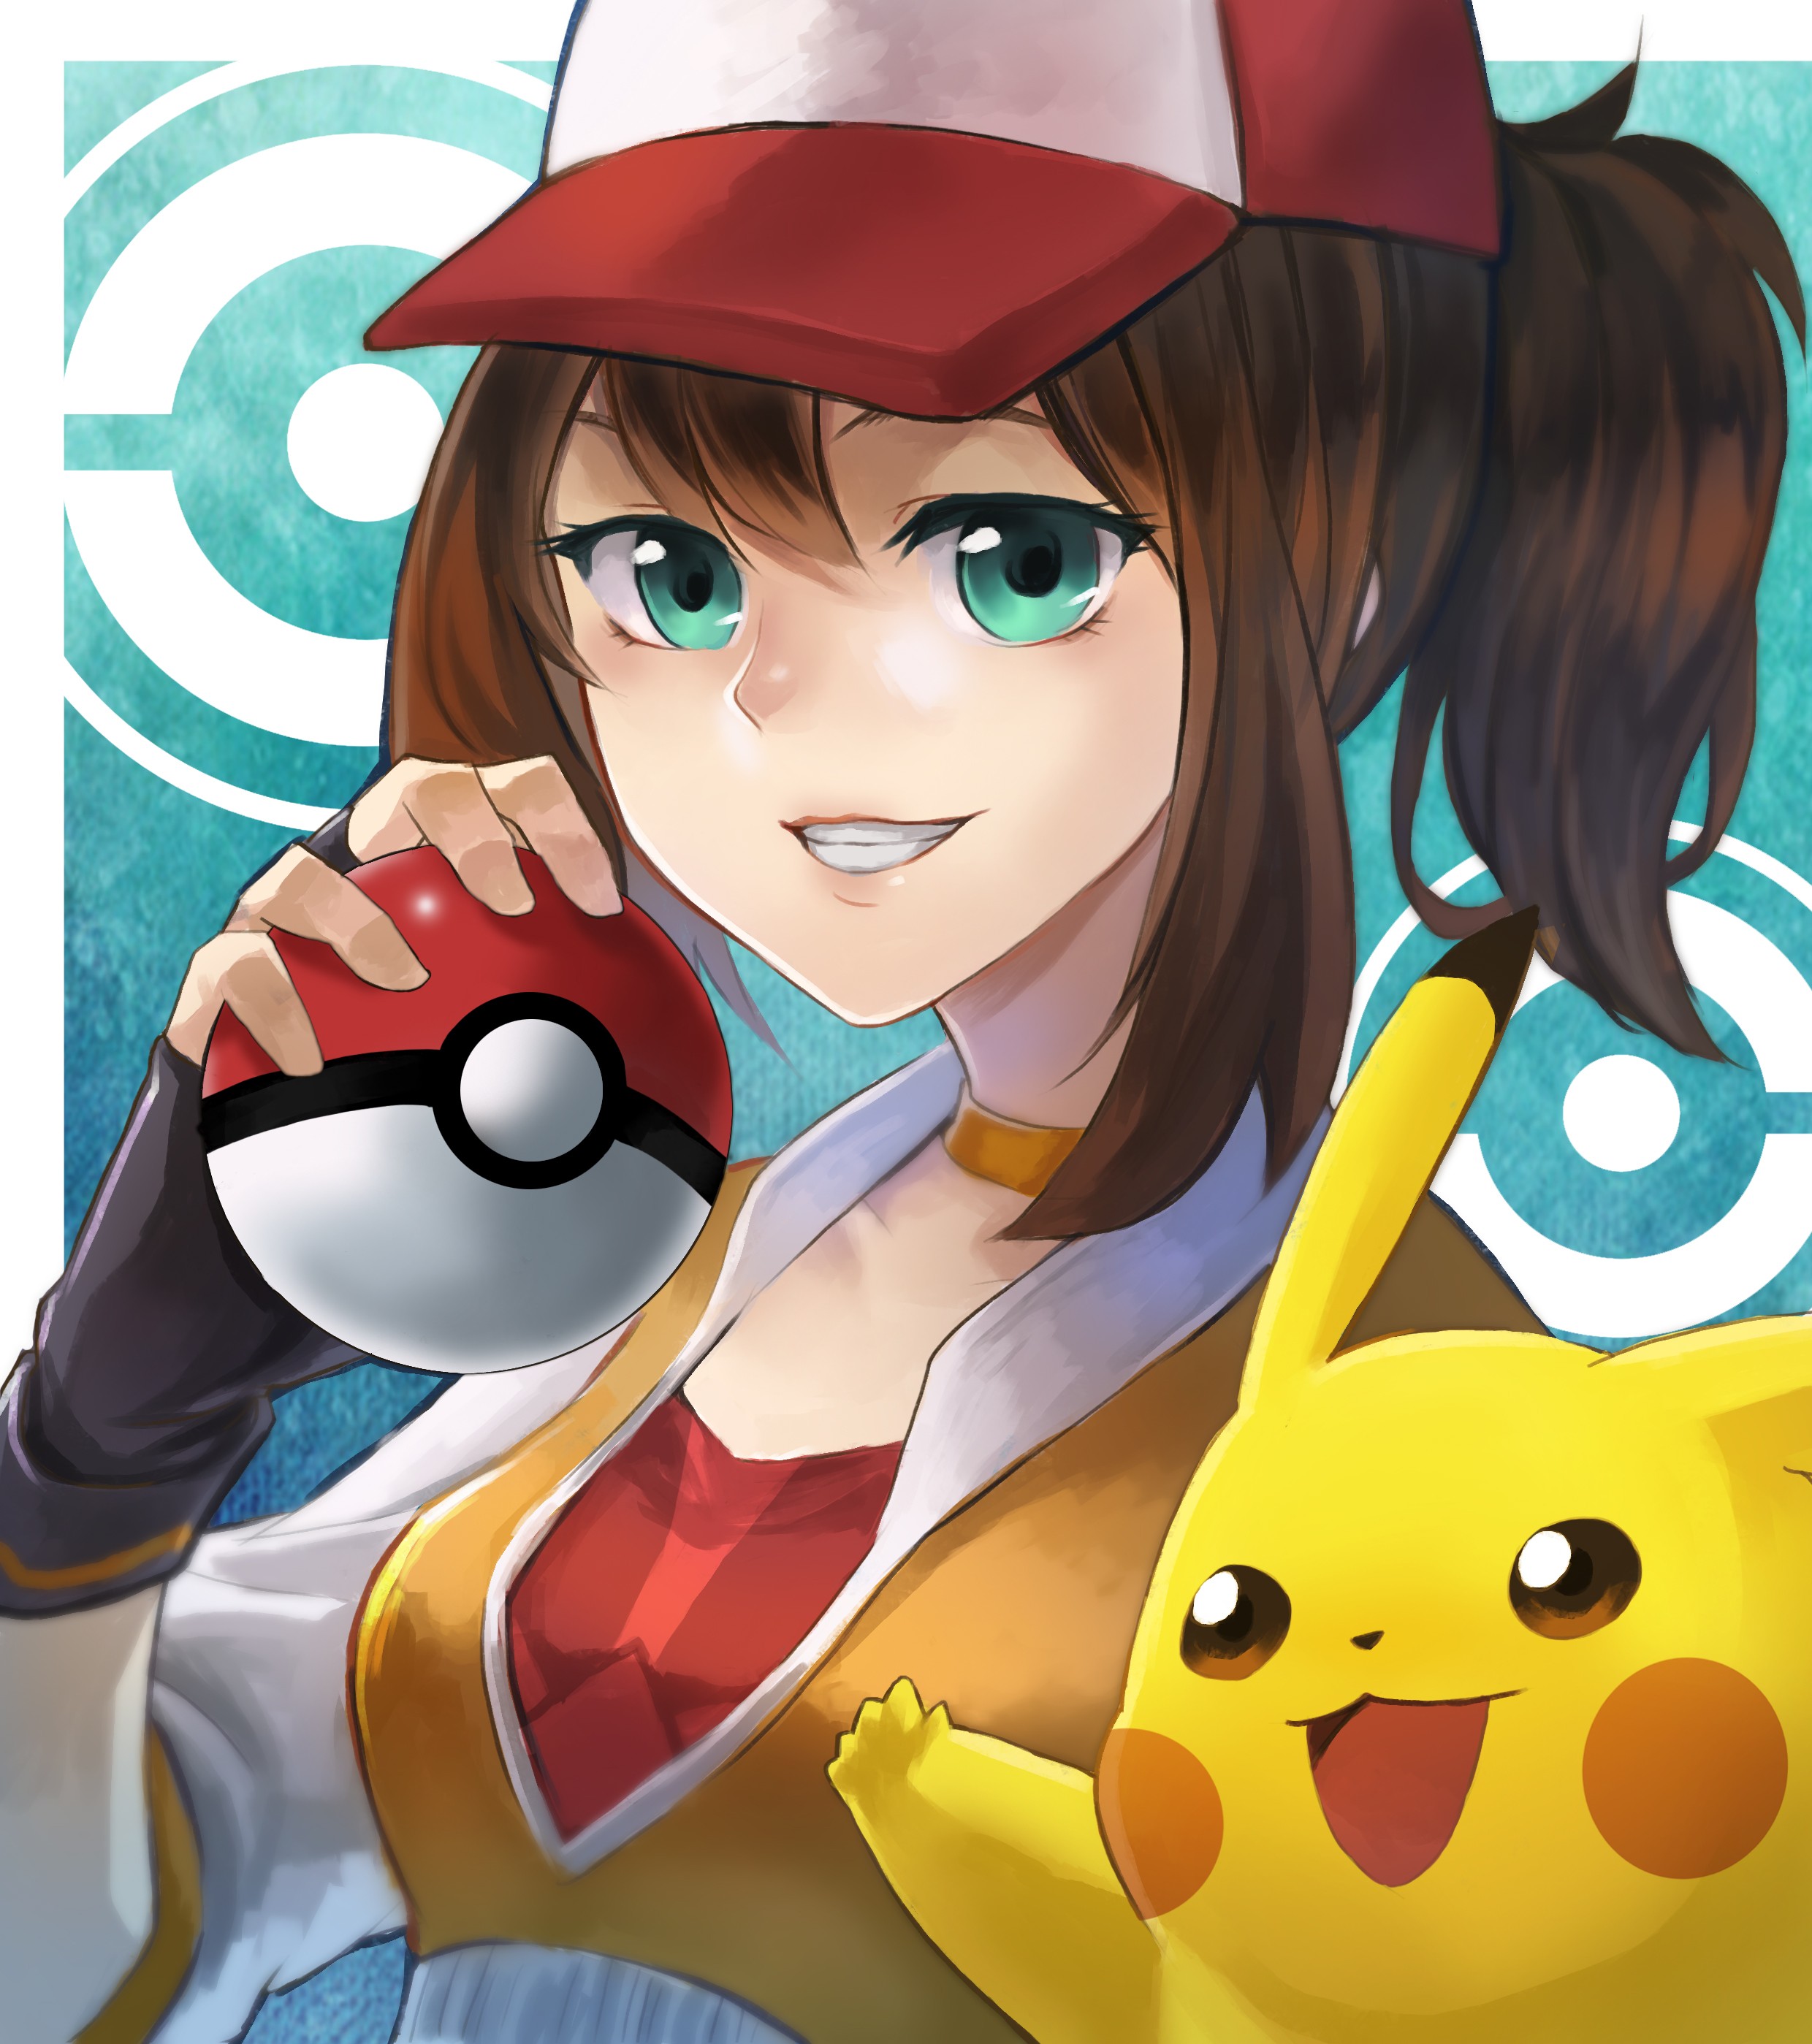 Anime 2480x2798 anime anime girls Pokémon Pokémon Go Pokémon trainers long hair brunette aqua eyes Pikachu baseball cap